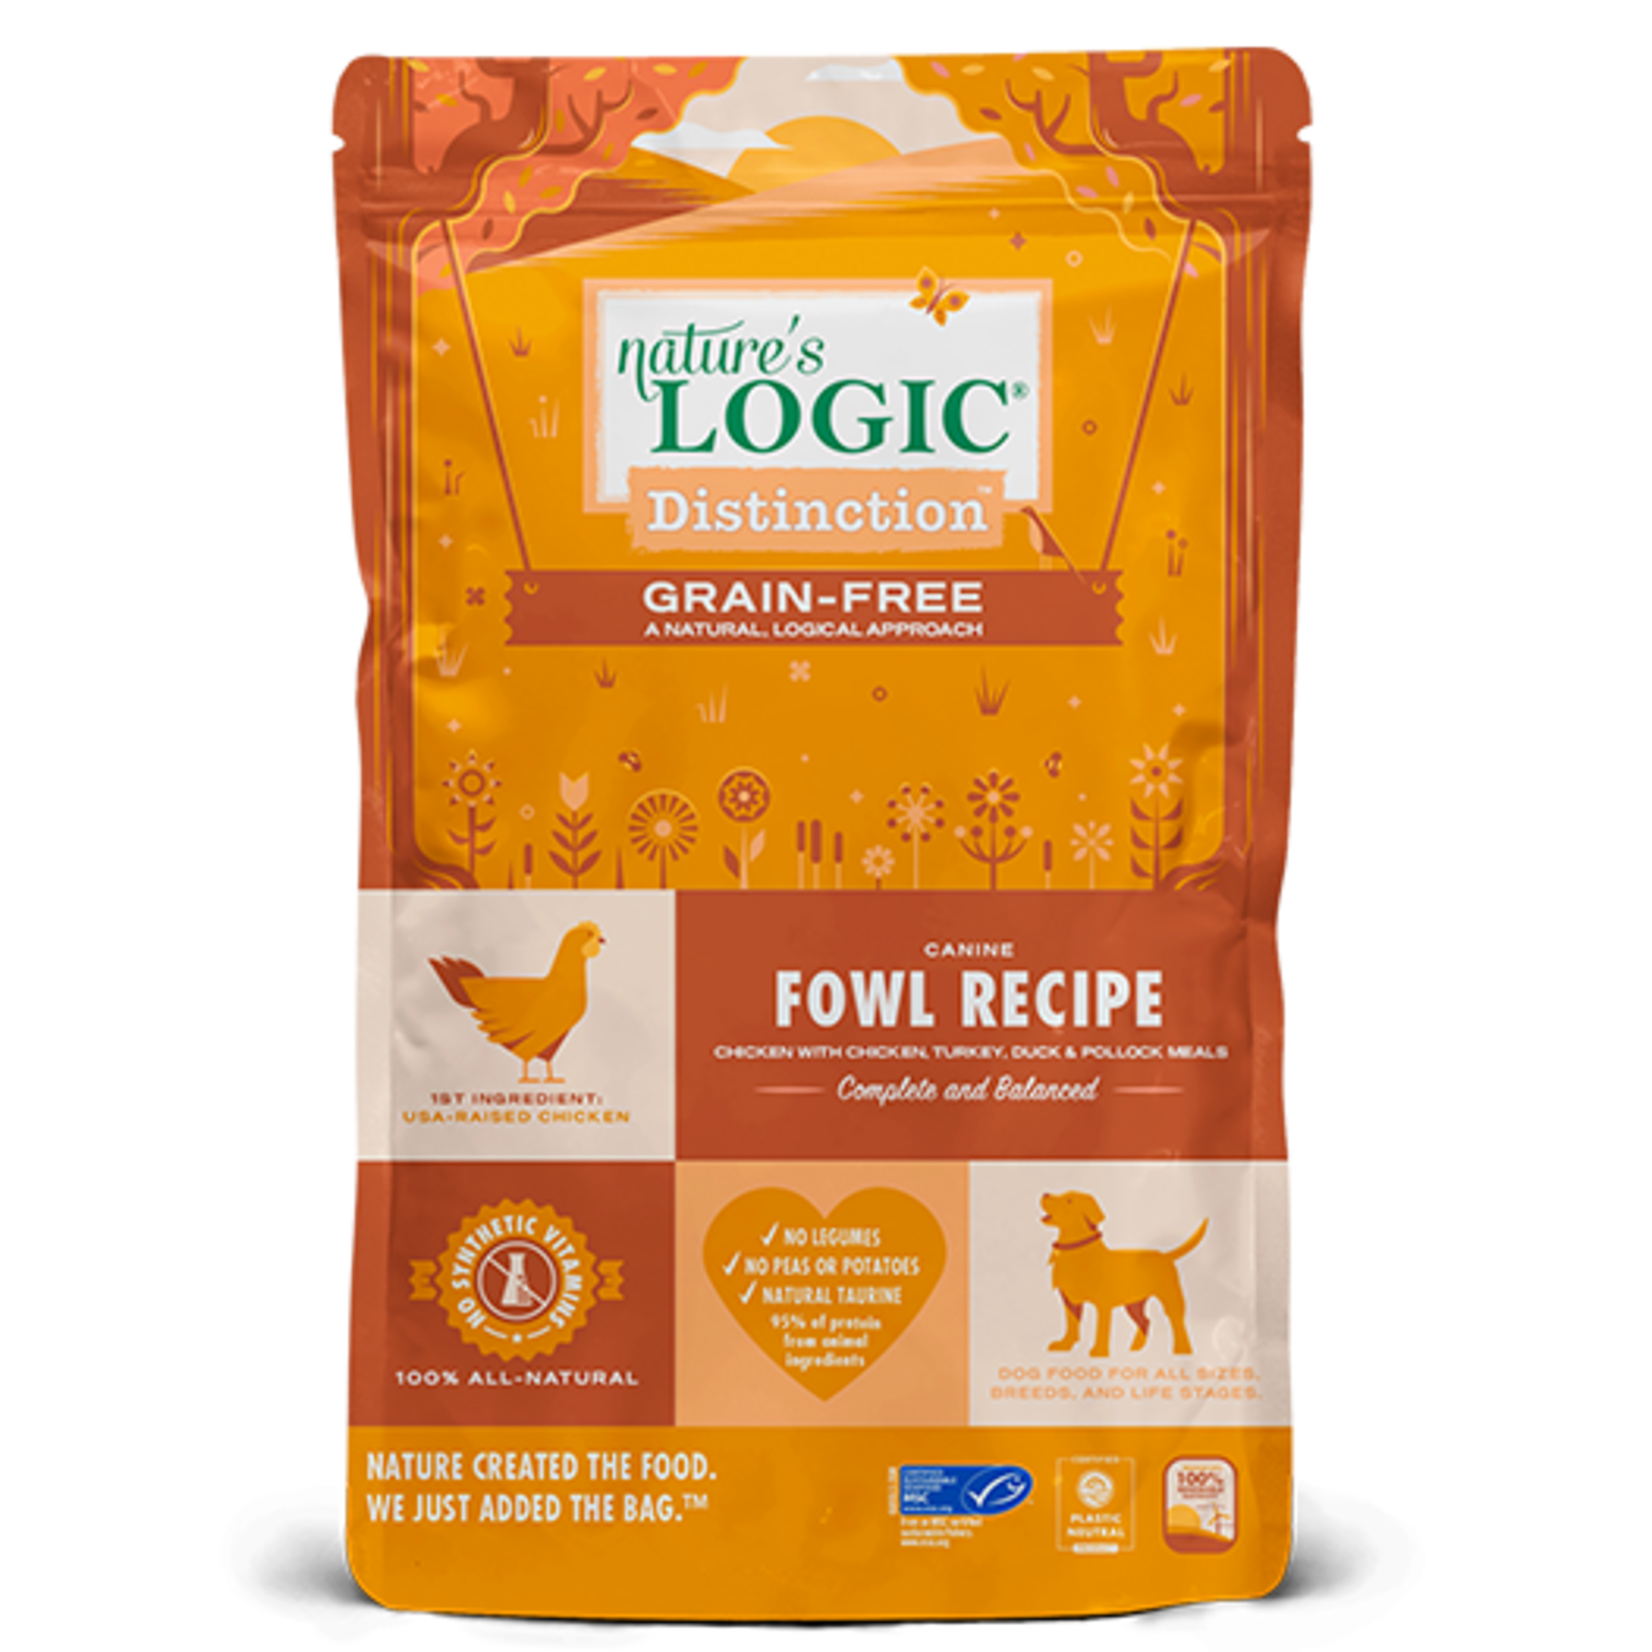 Nature's Logic Nature's Logic Distinction - Grain-Free Canine Fowl Recipe